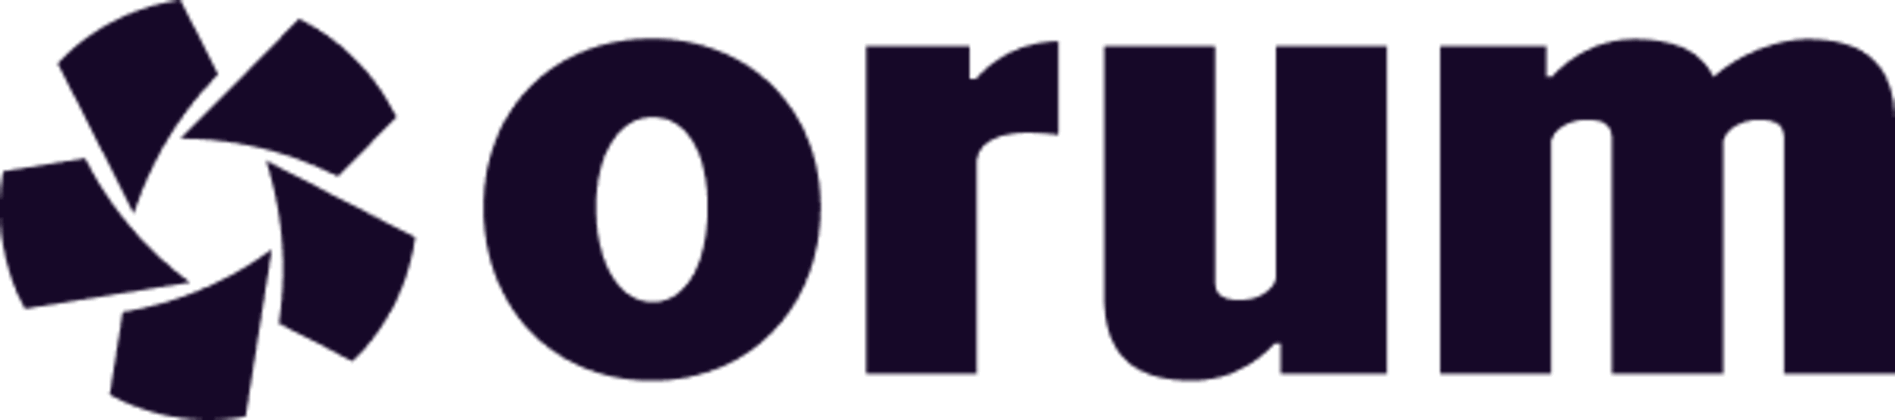 orum logo